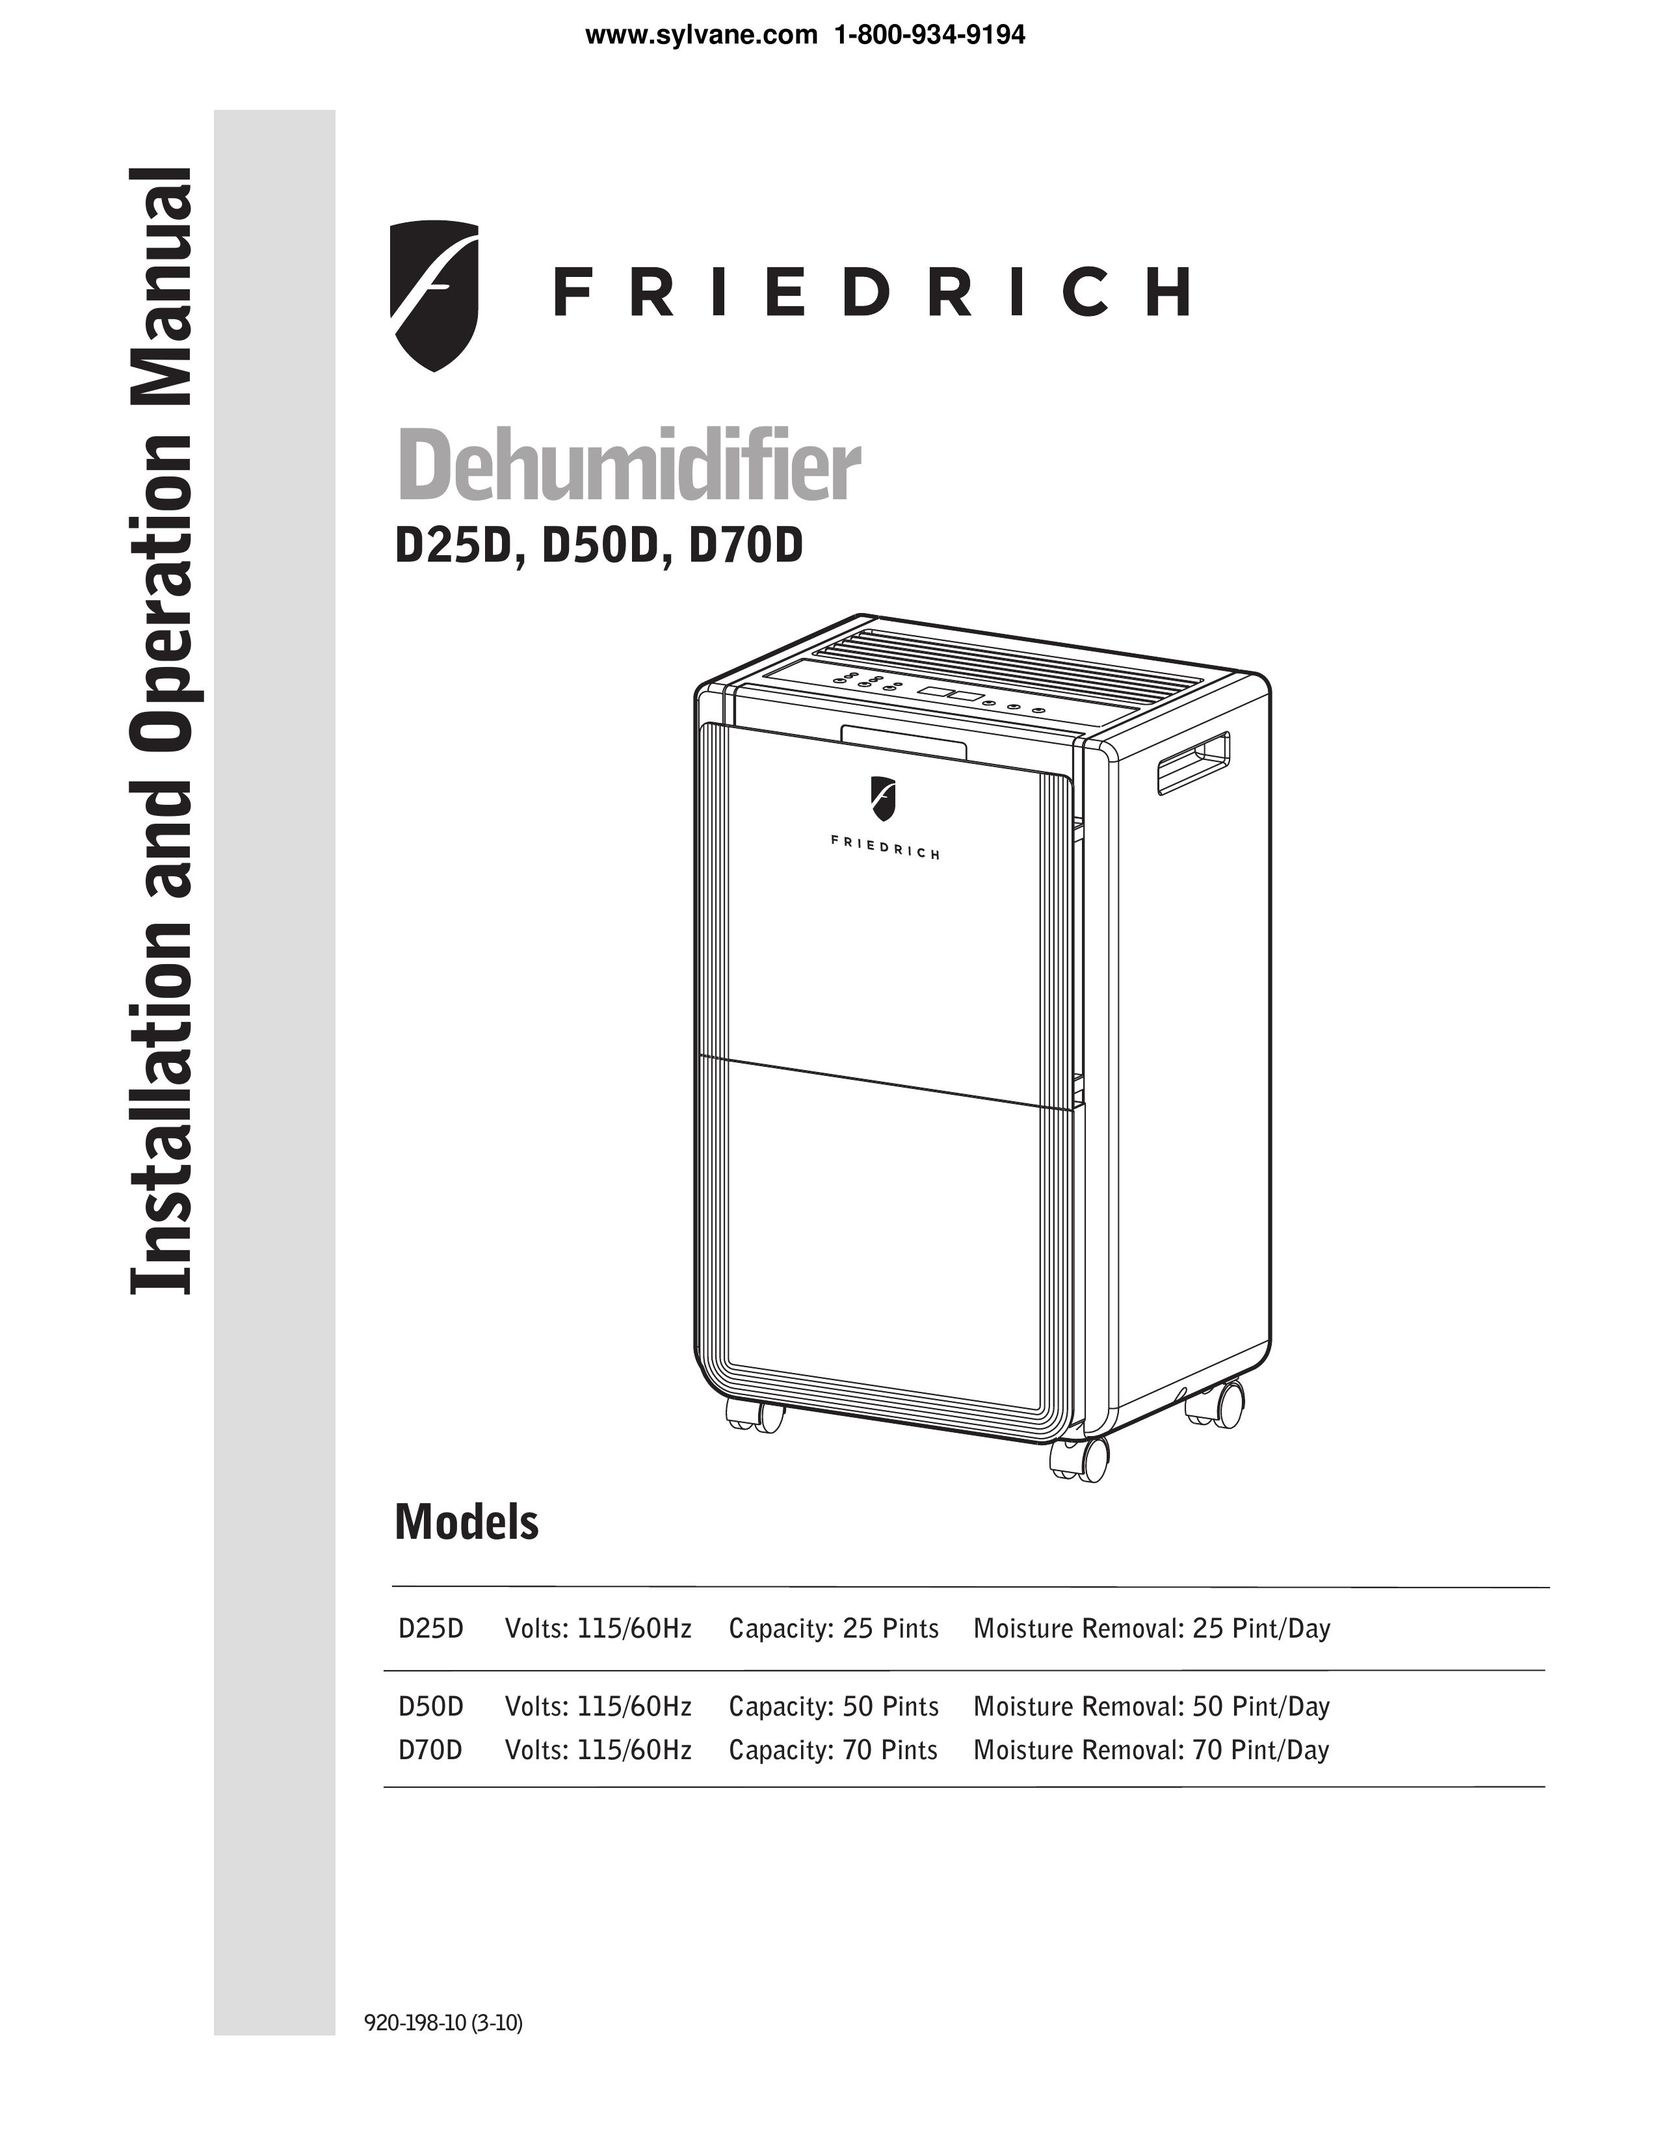 Frigidaire D25D Dehumidifier User Manual